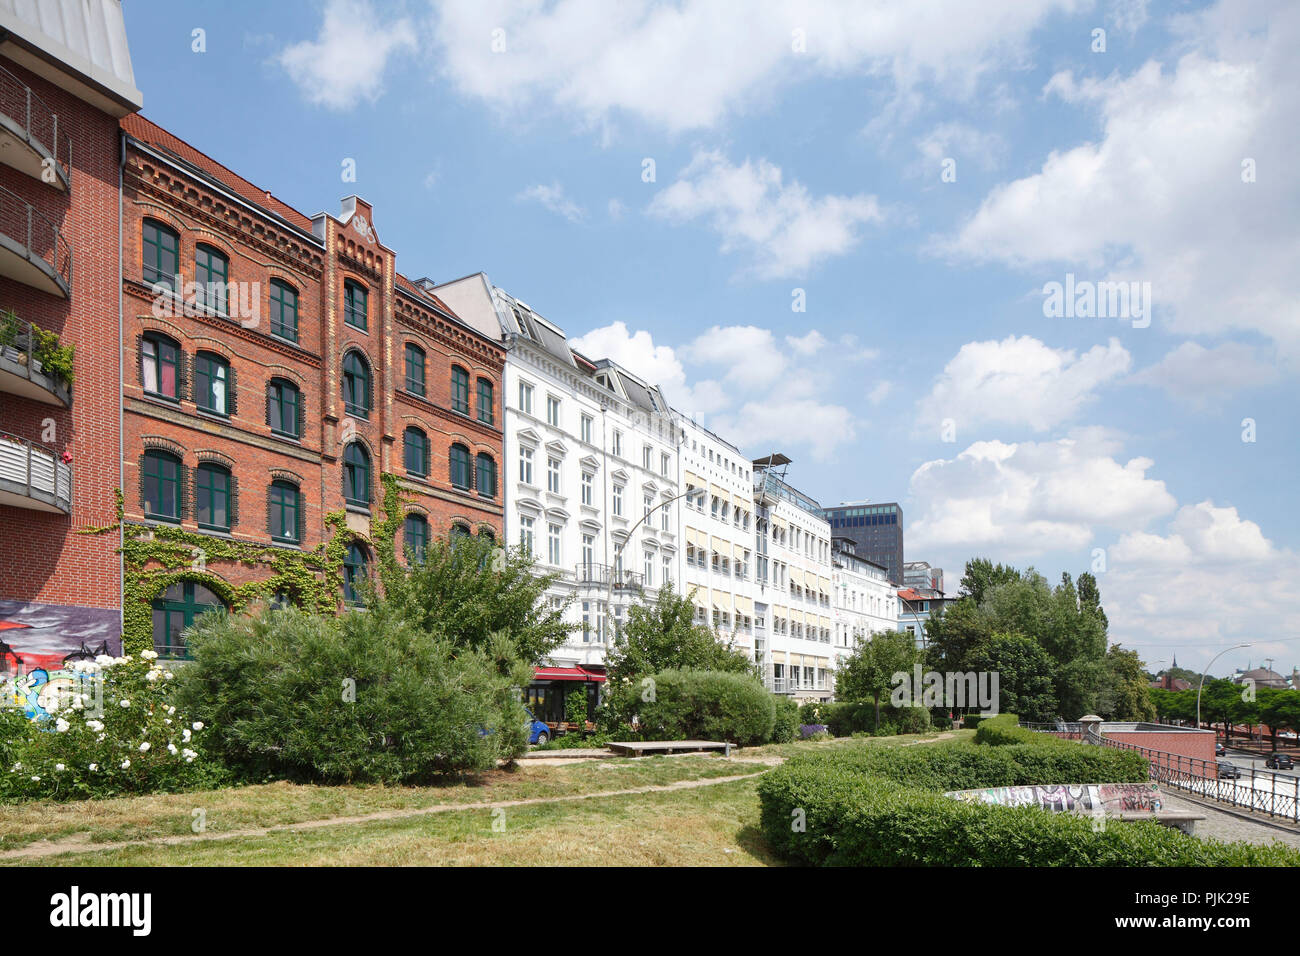 Old house facades, Hafenstraße, St. Pauli, Hamburg, Germany, Europe Stock Photo